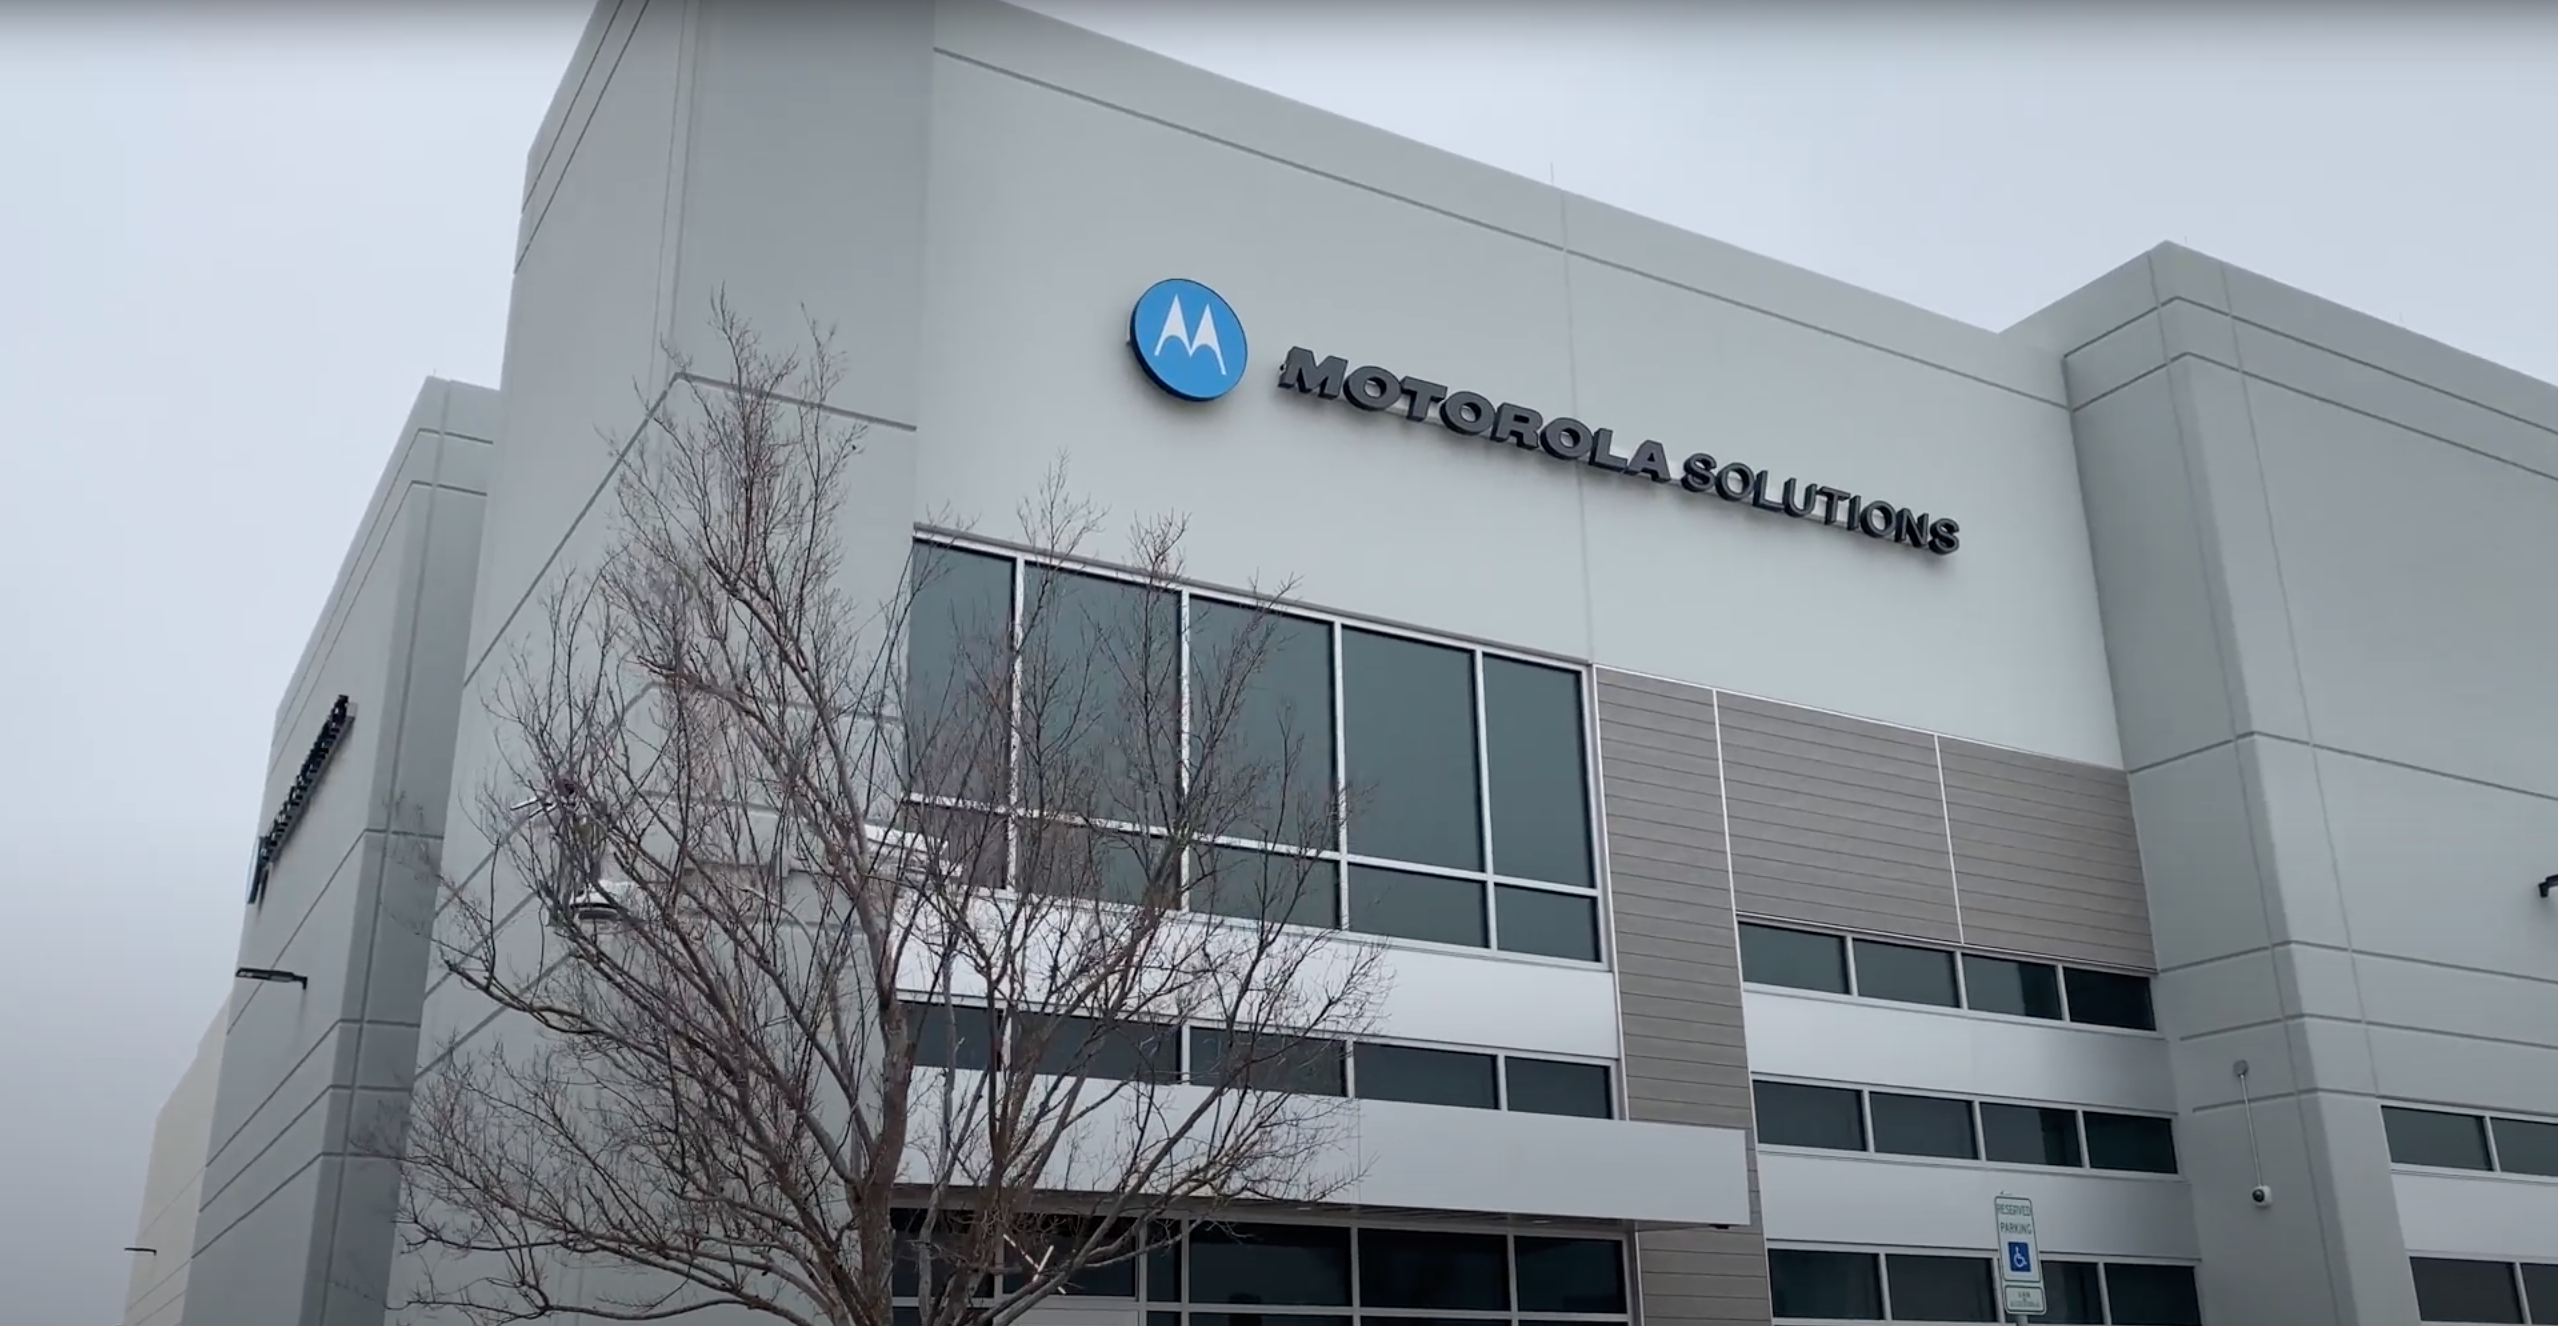 Motorola Solutions facility